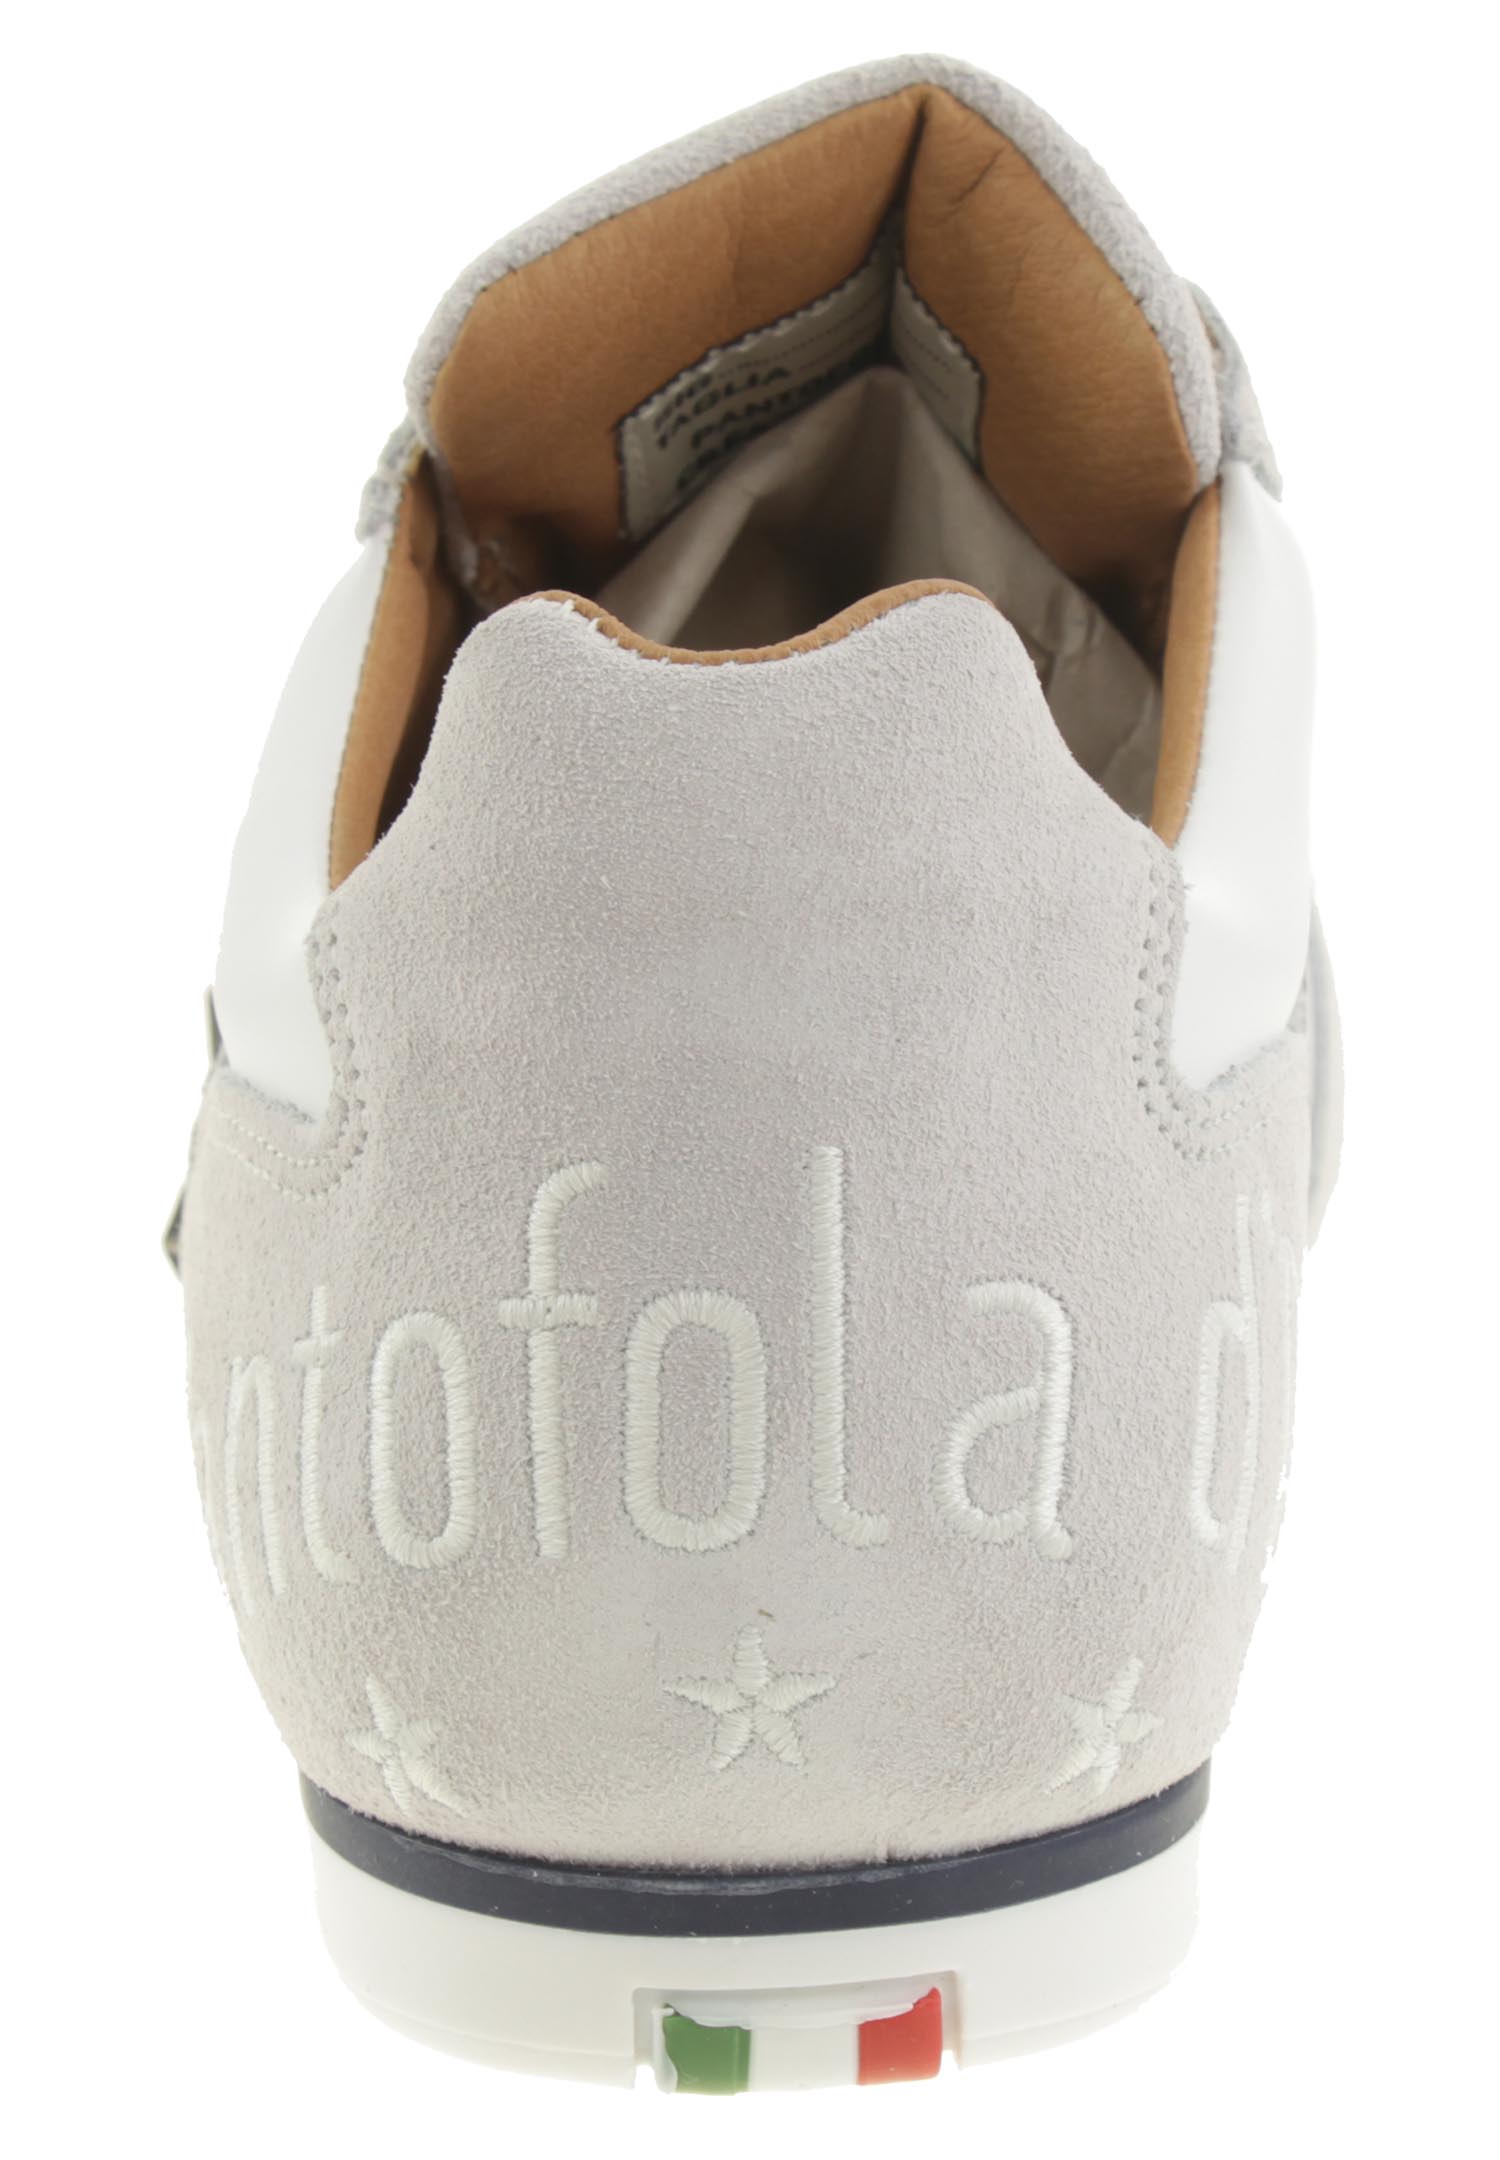 Pantofola d' Oro IMOLA UOMO LOW Herren Leder Sneaker 10221033 weiss